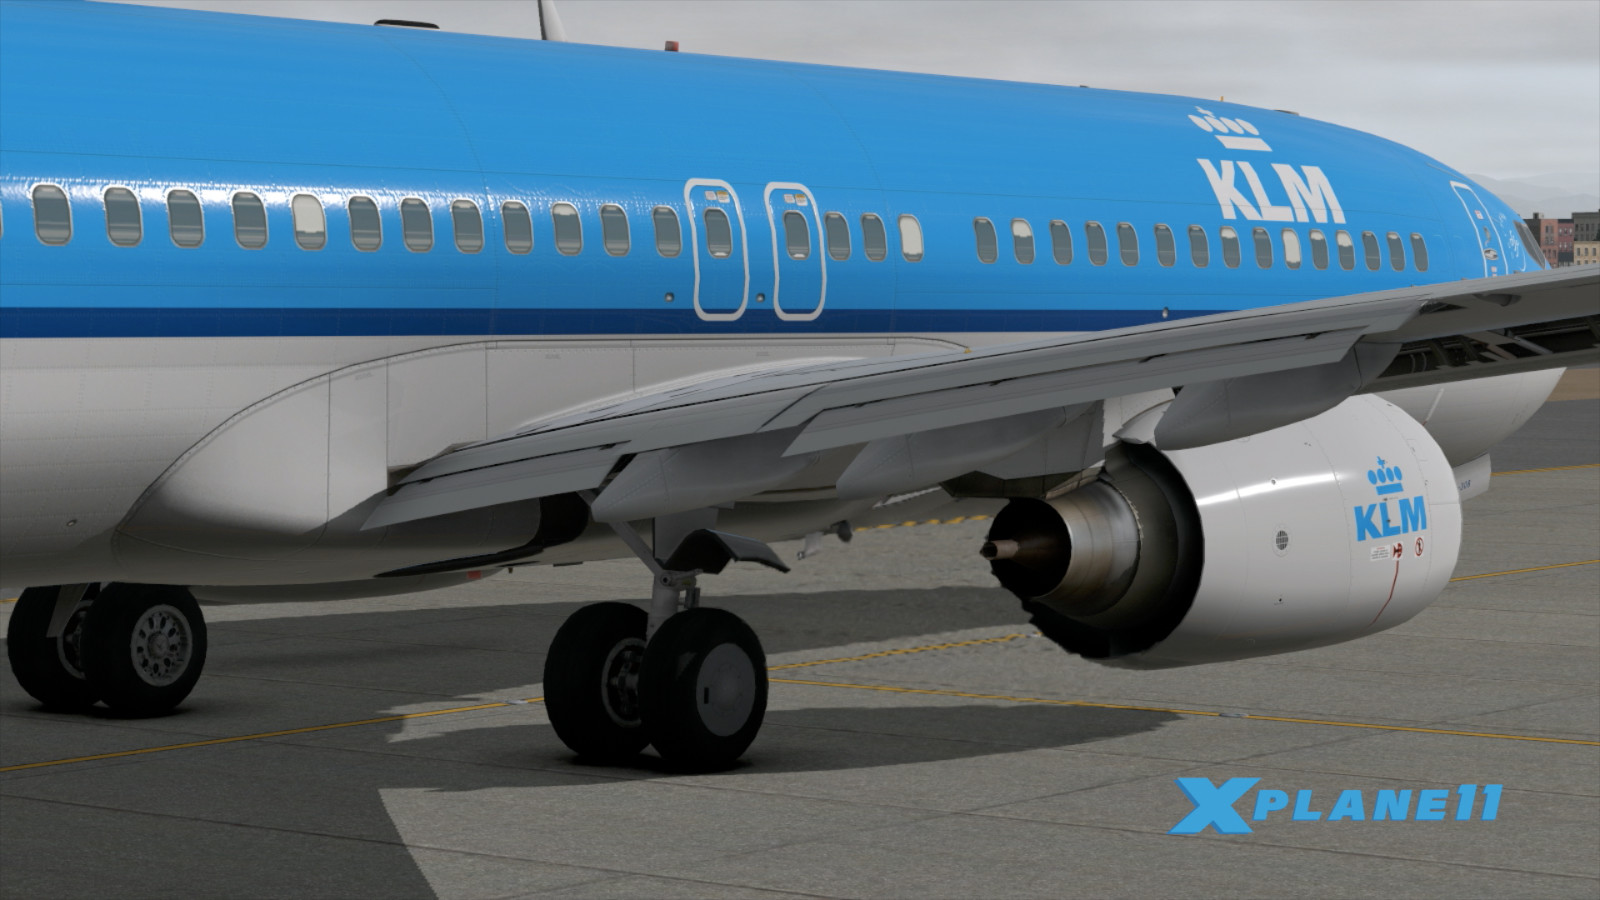 x plane 11 latest version